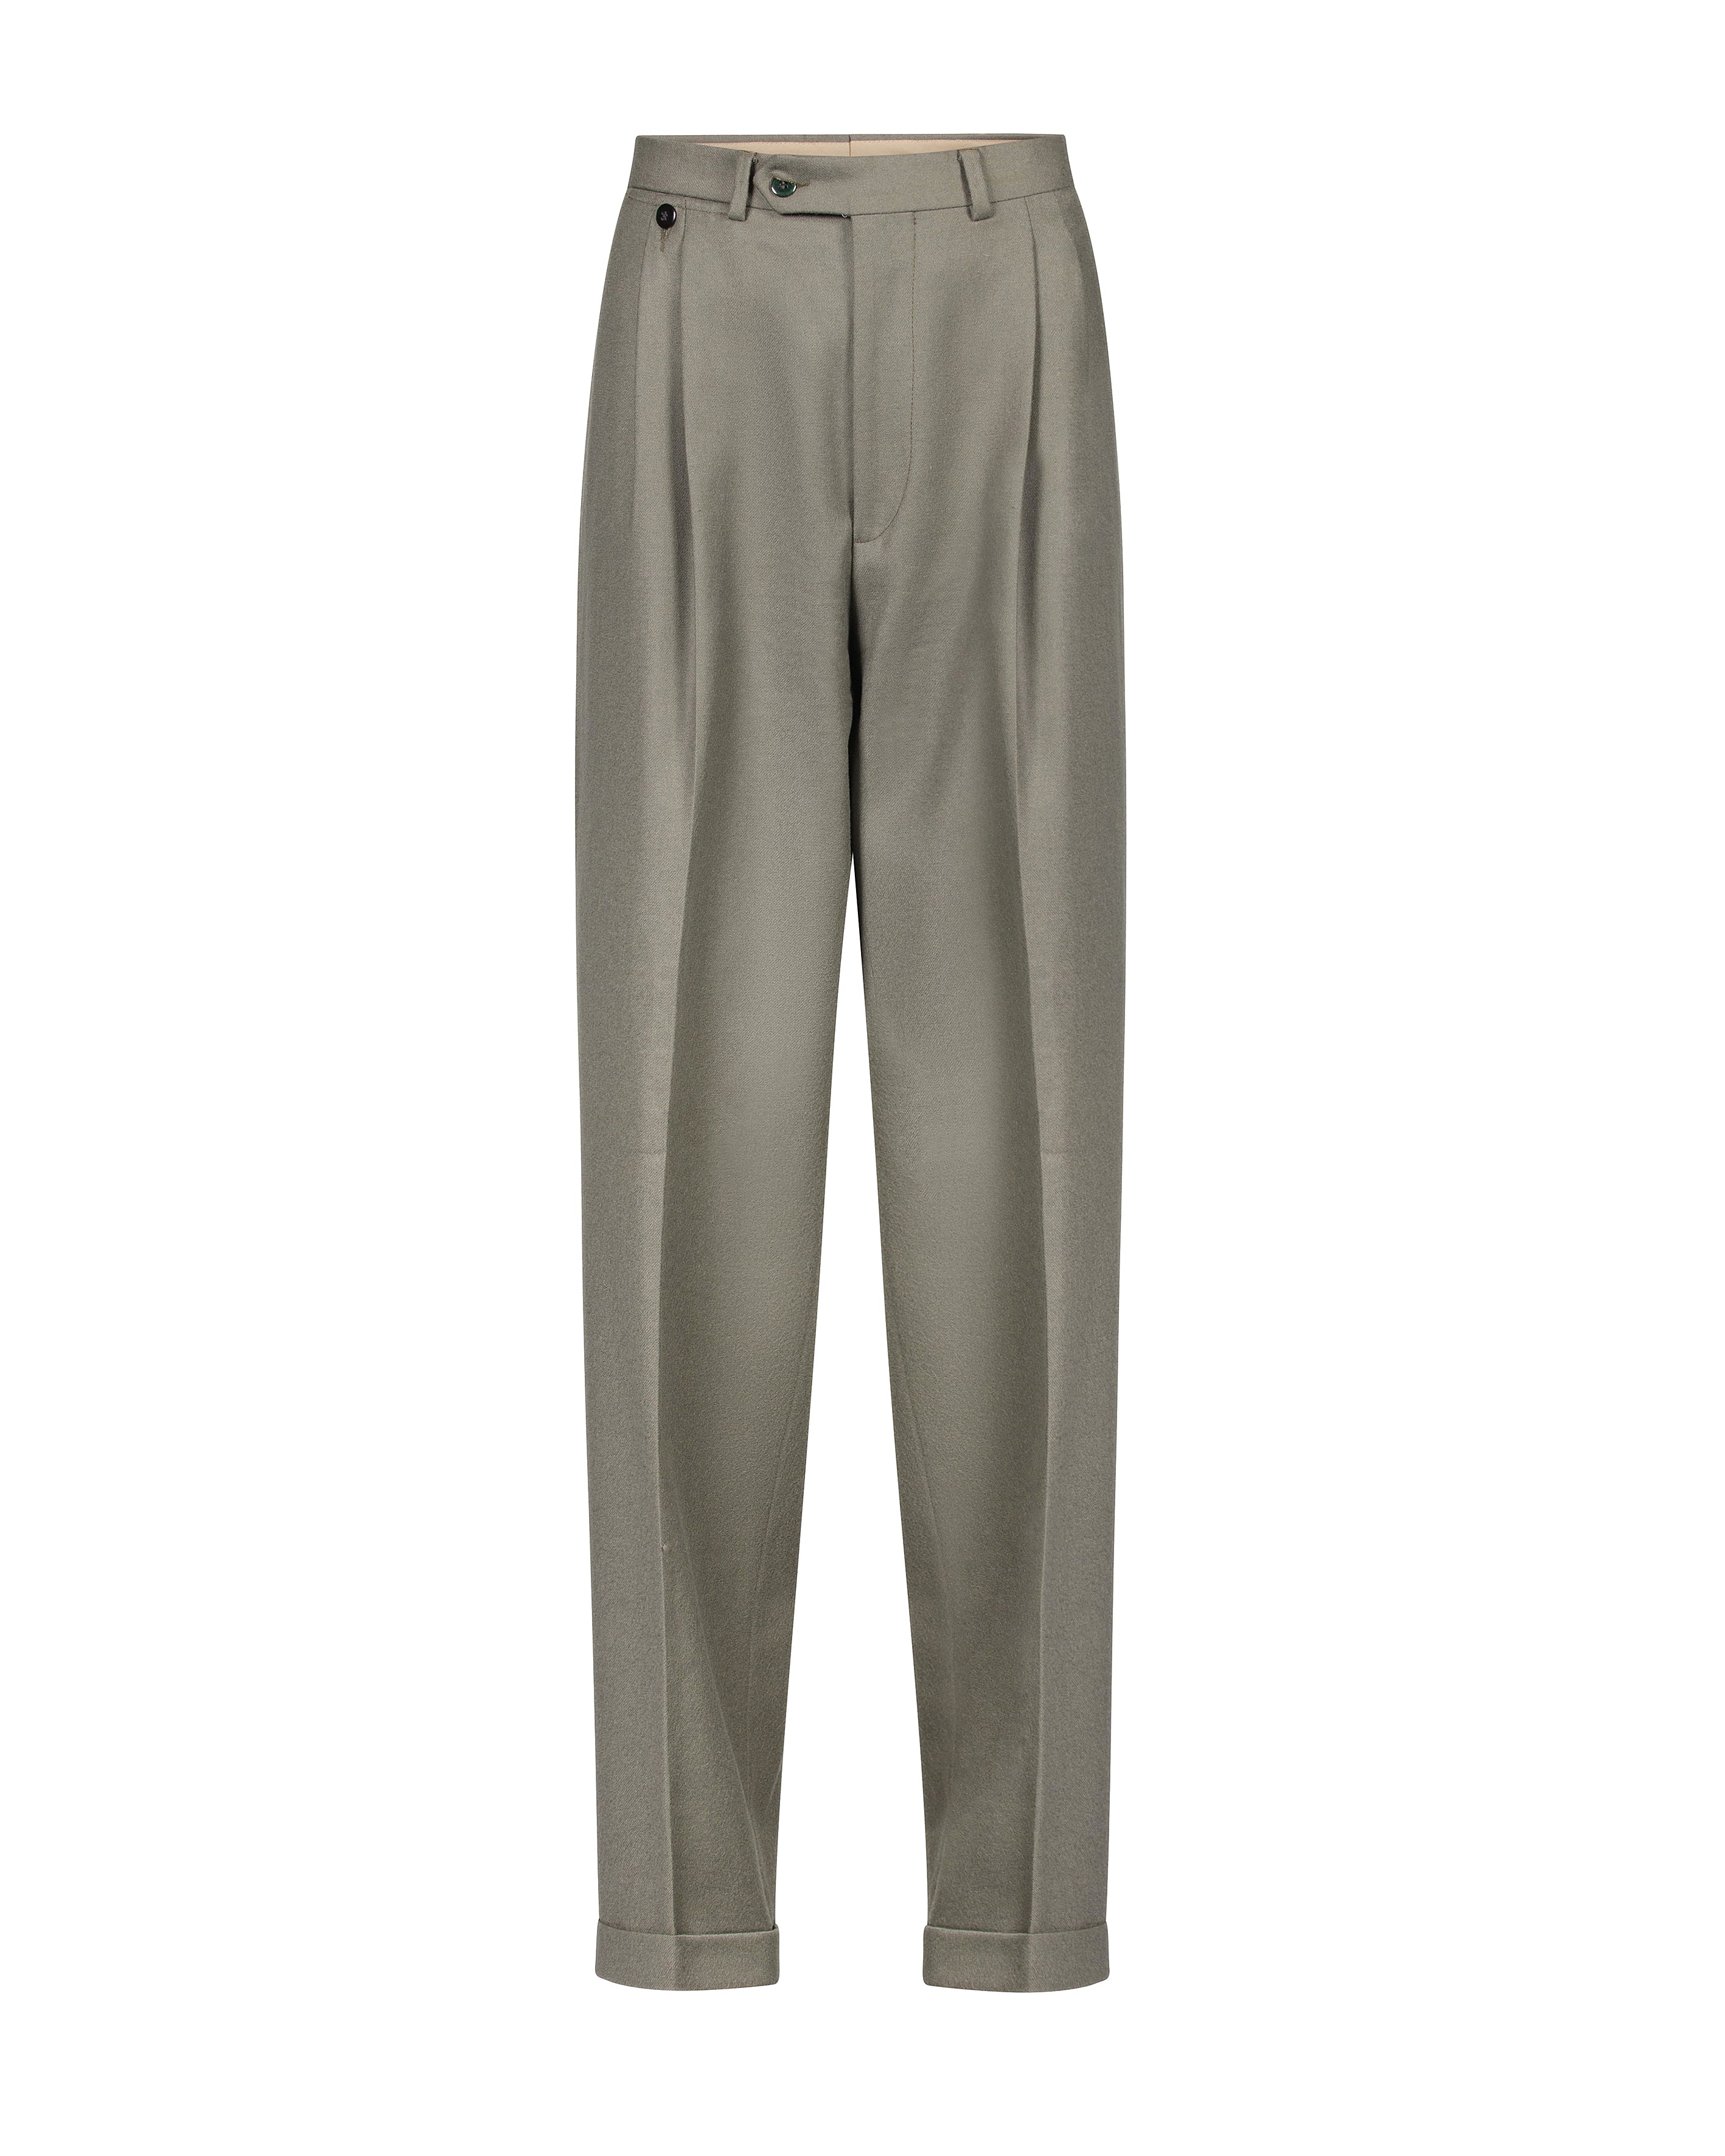 French grey pleated pantalon